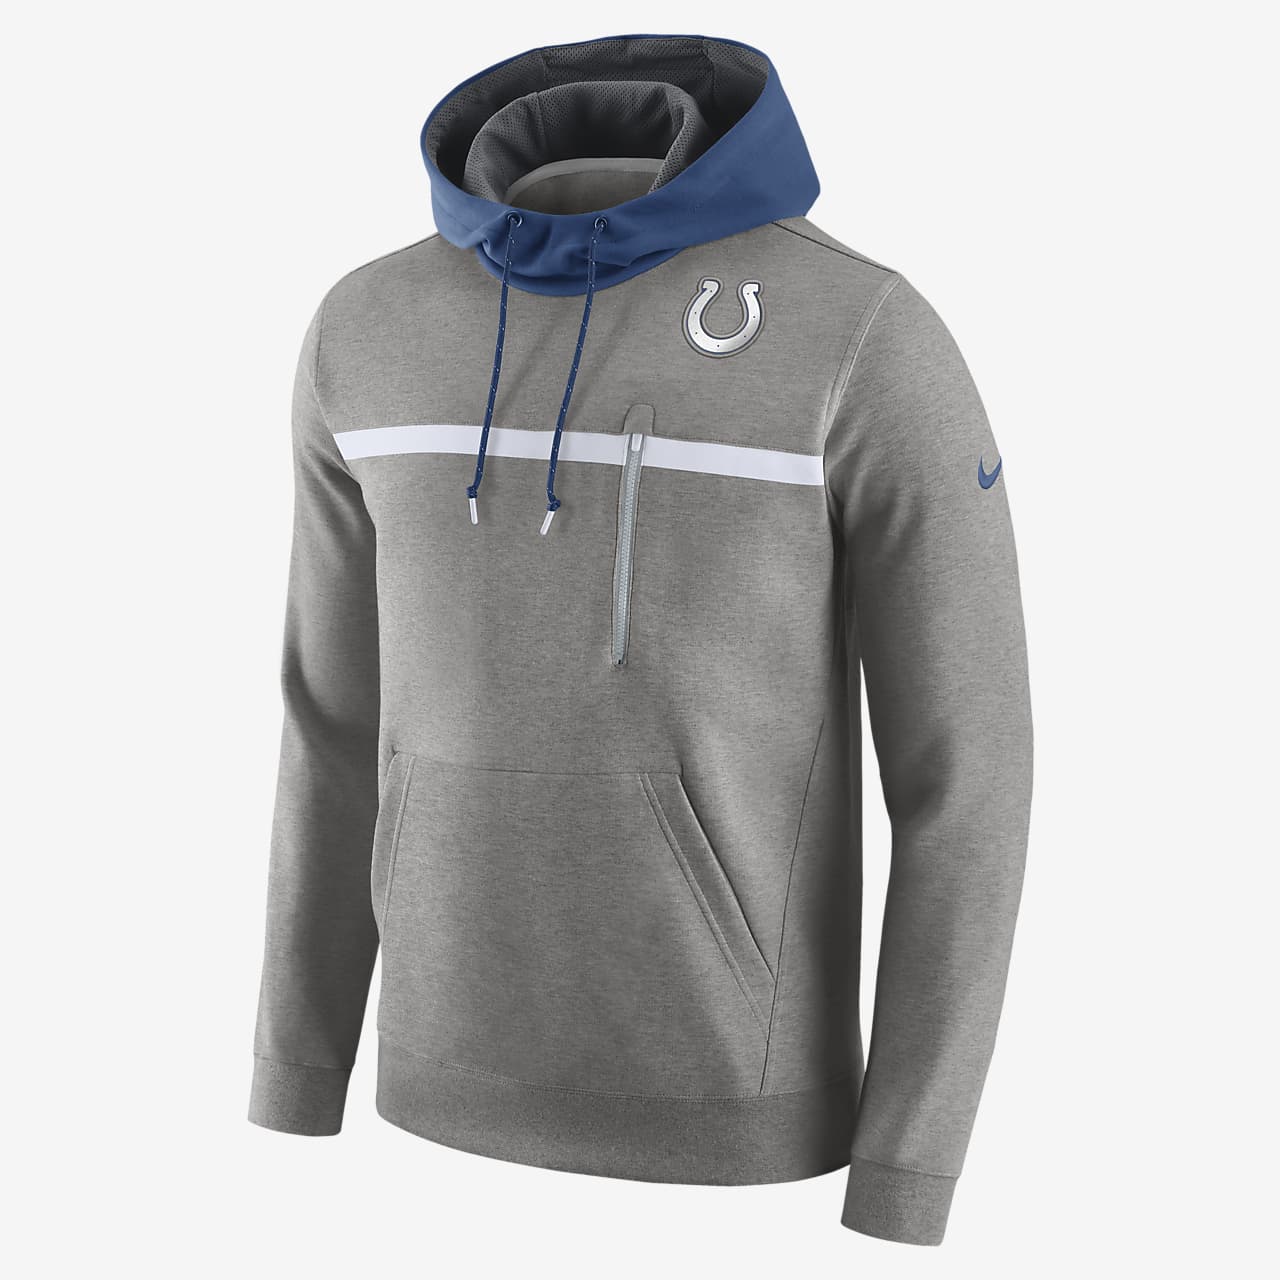 Nike Championship Drive Sweatshirt (NFL Colts) Men's Hoodie